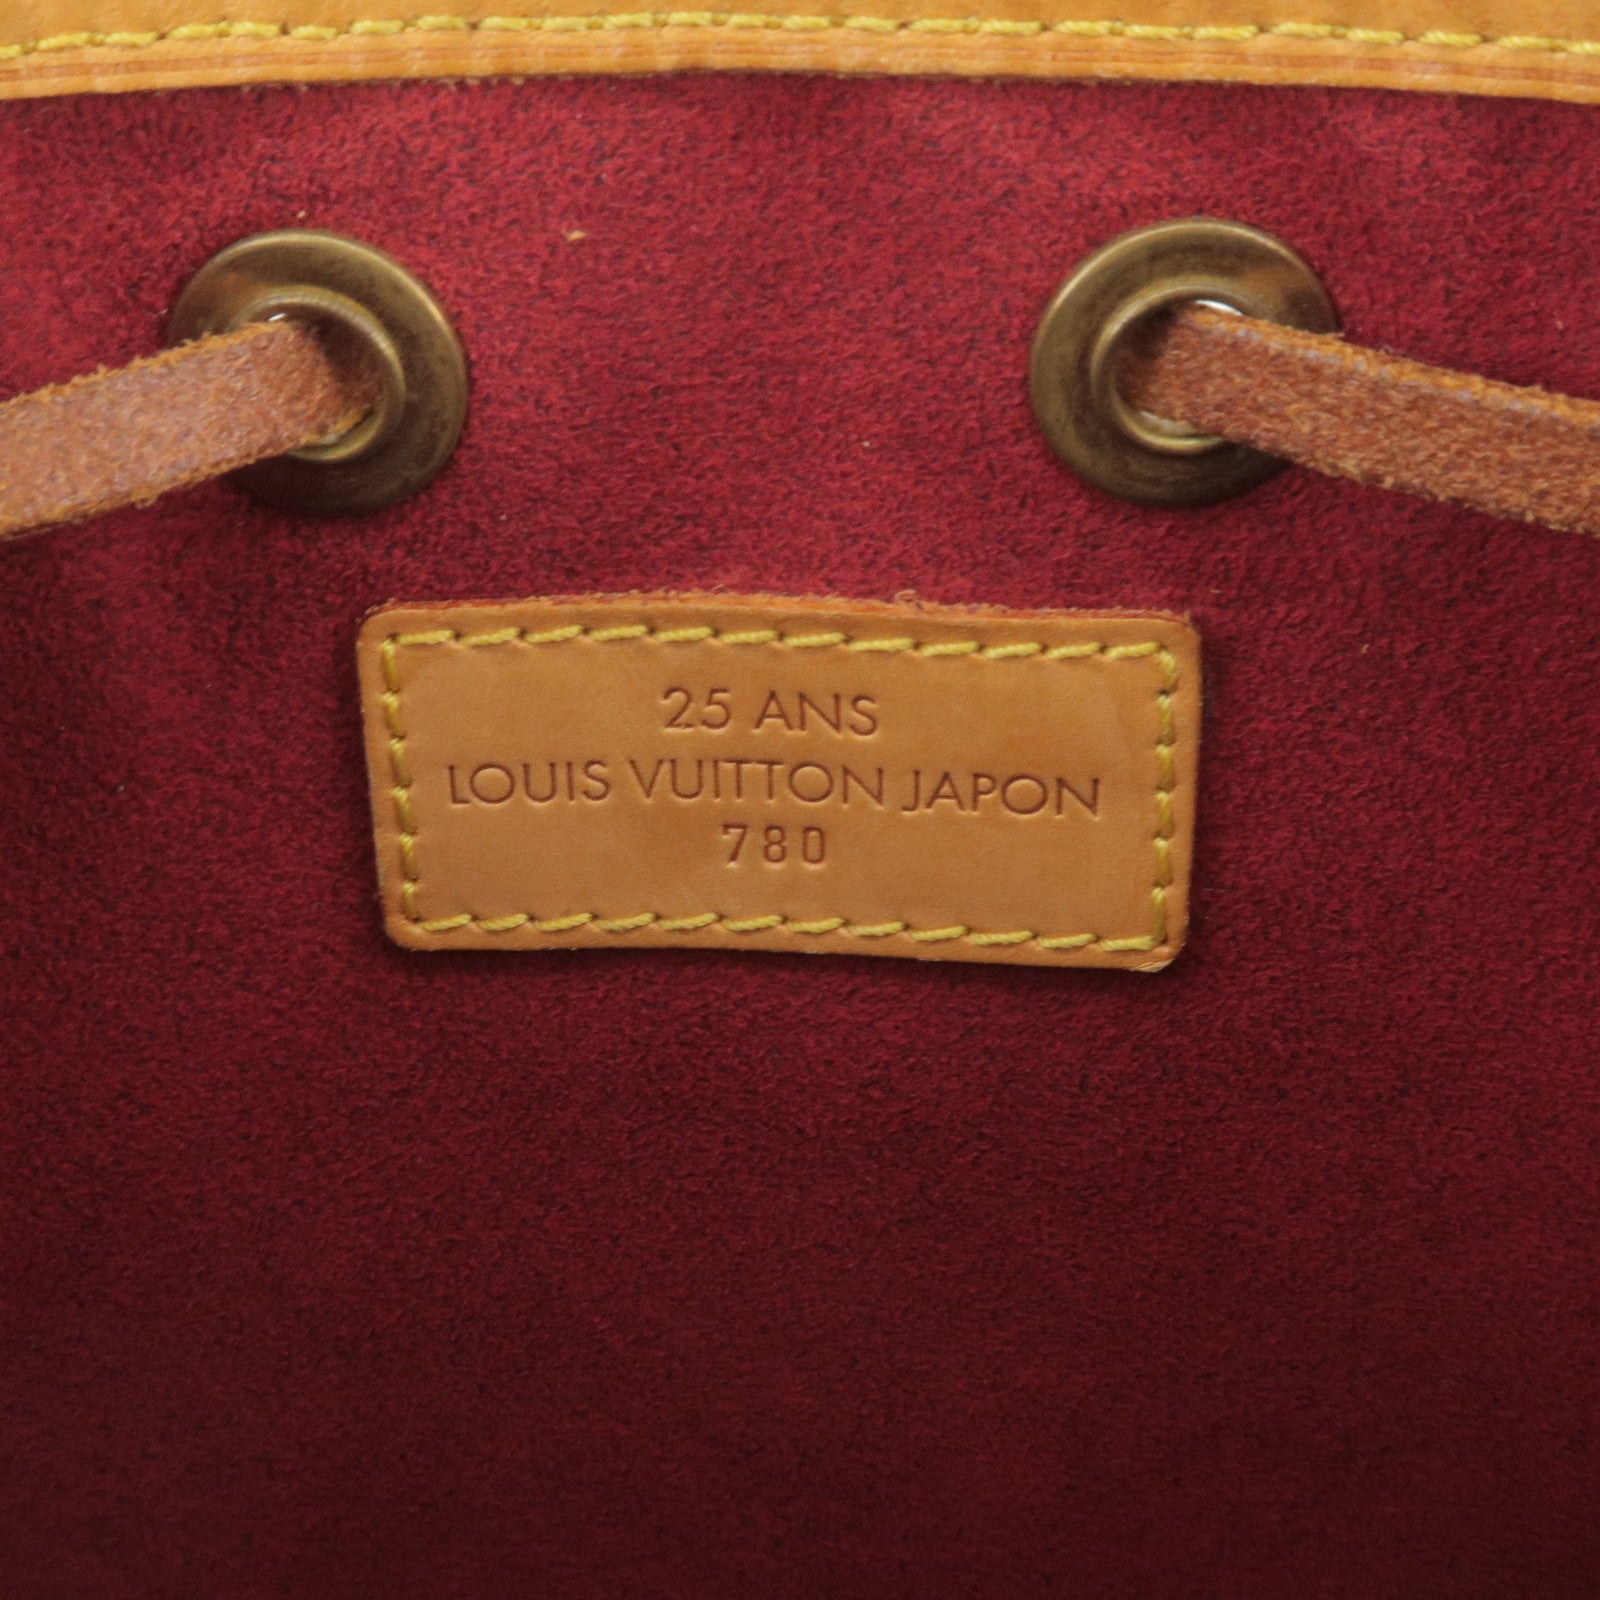 Sold at Auction: LOUIS VUITTON edles Herren Portemonnaie ZIPPY